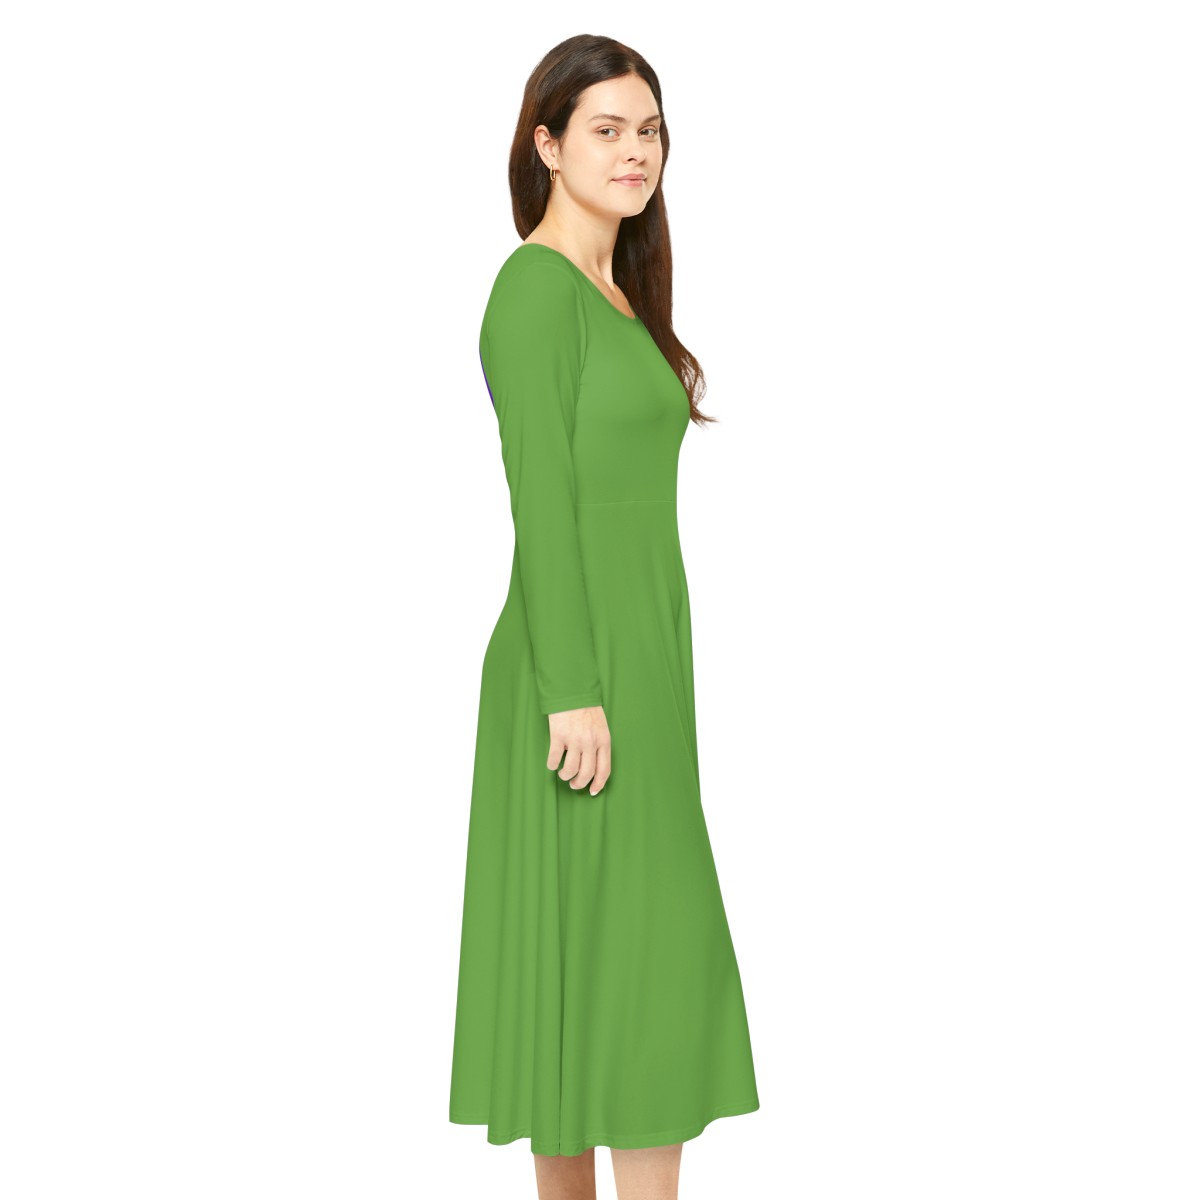 Women's Long Sleeve Dress product thumbnail image